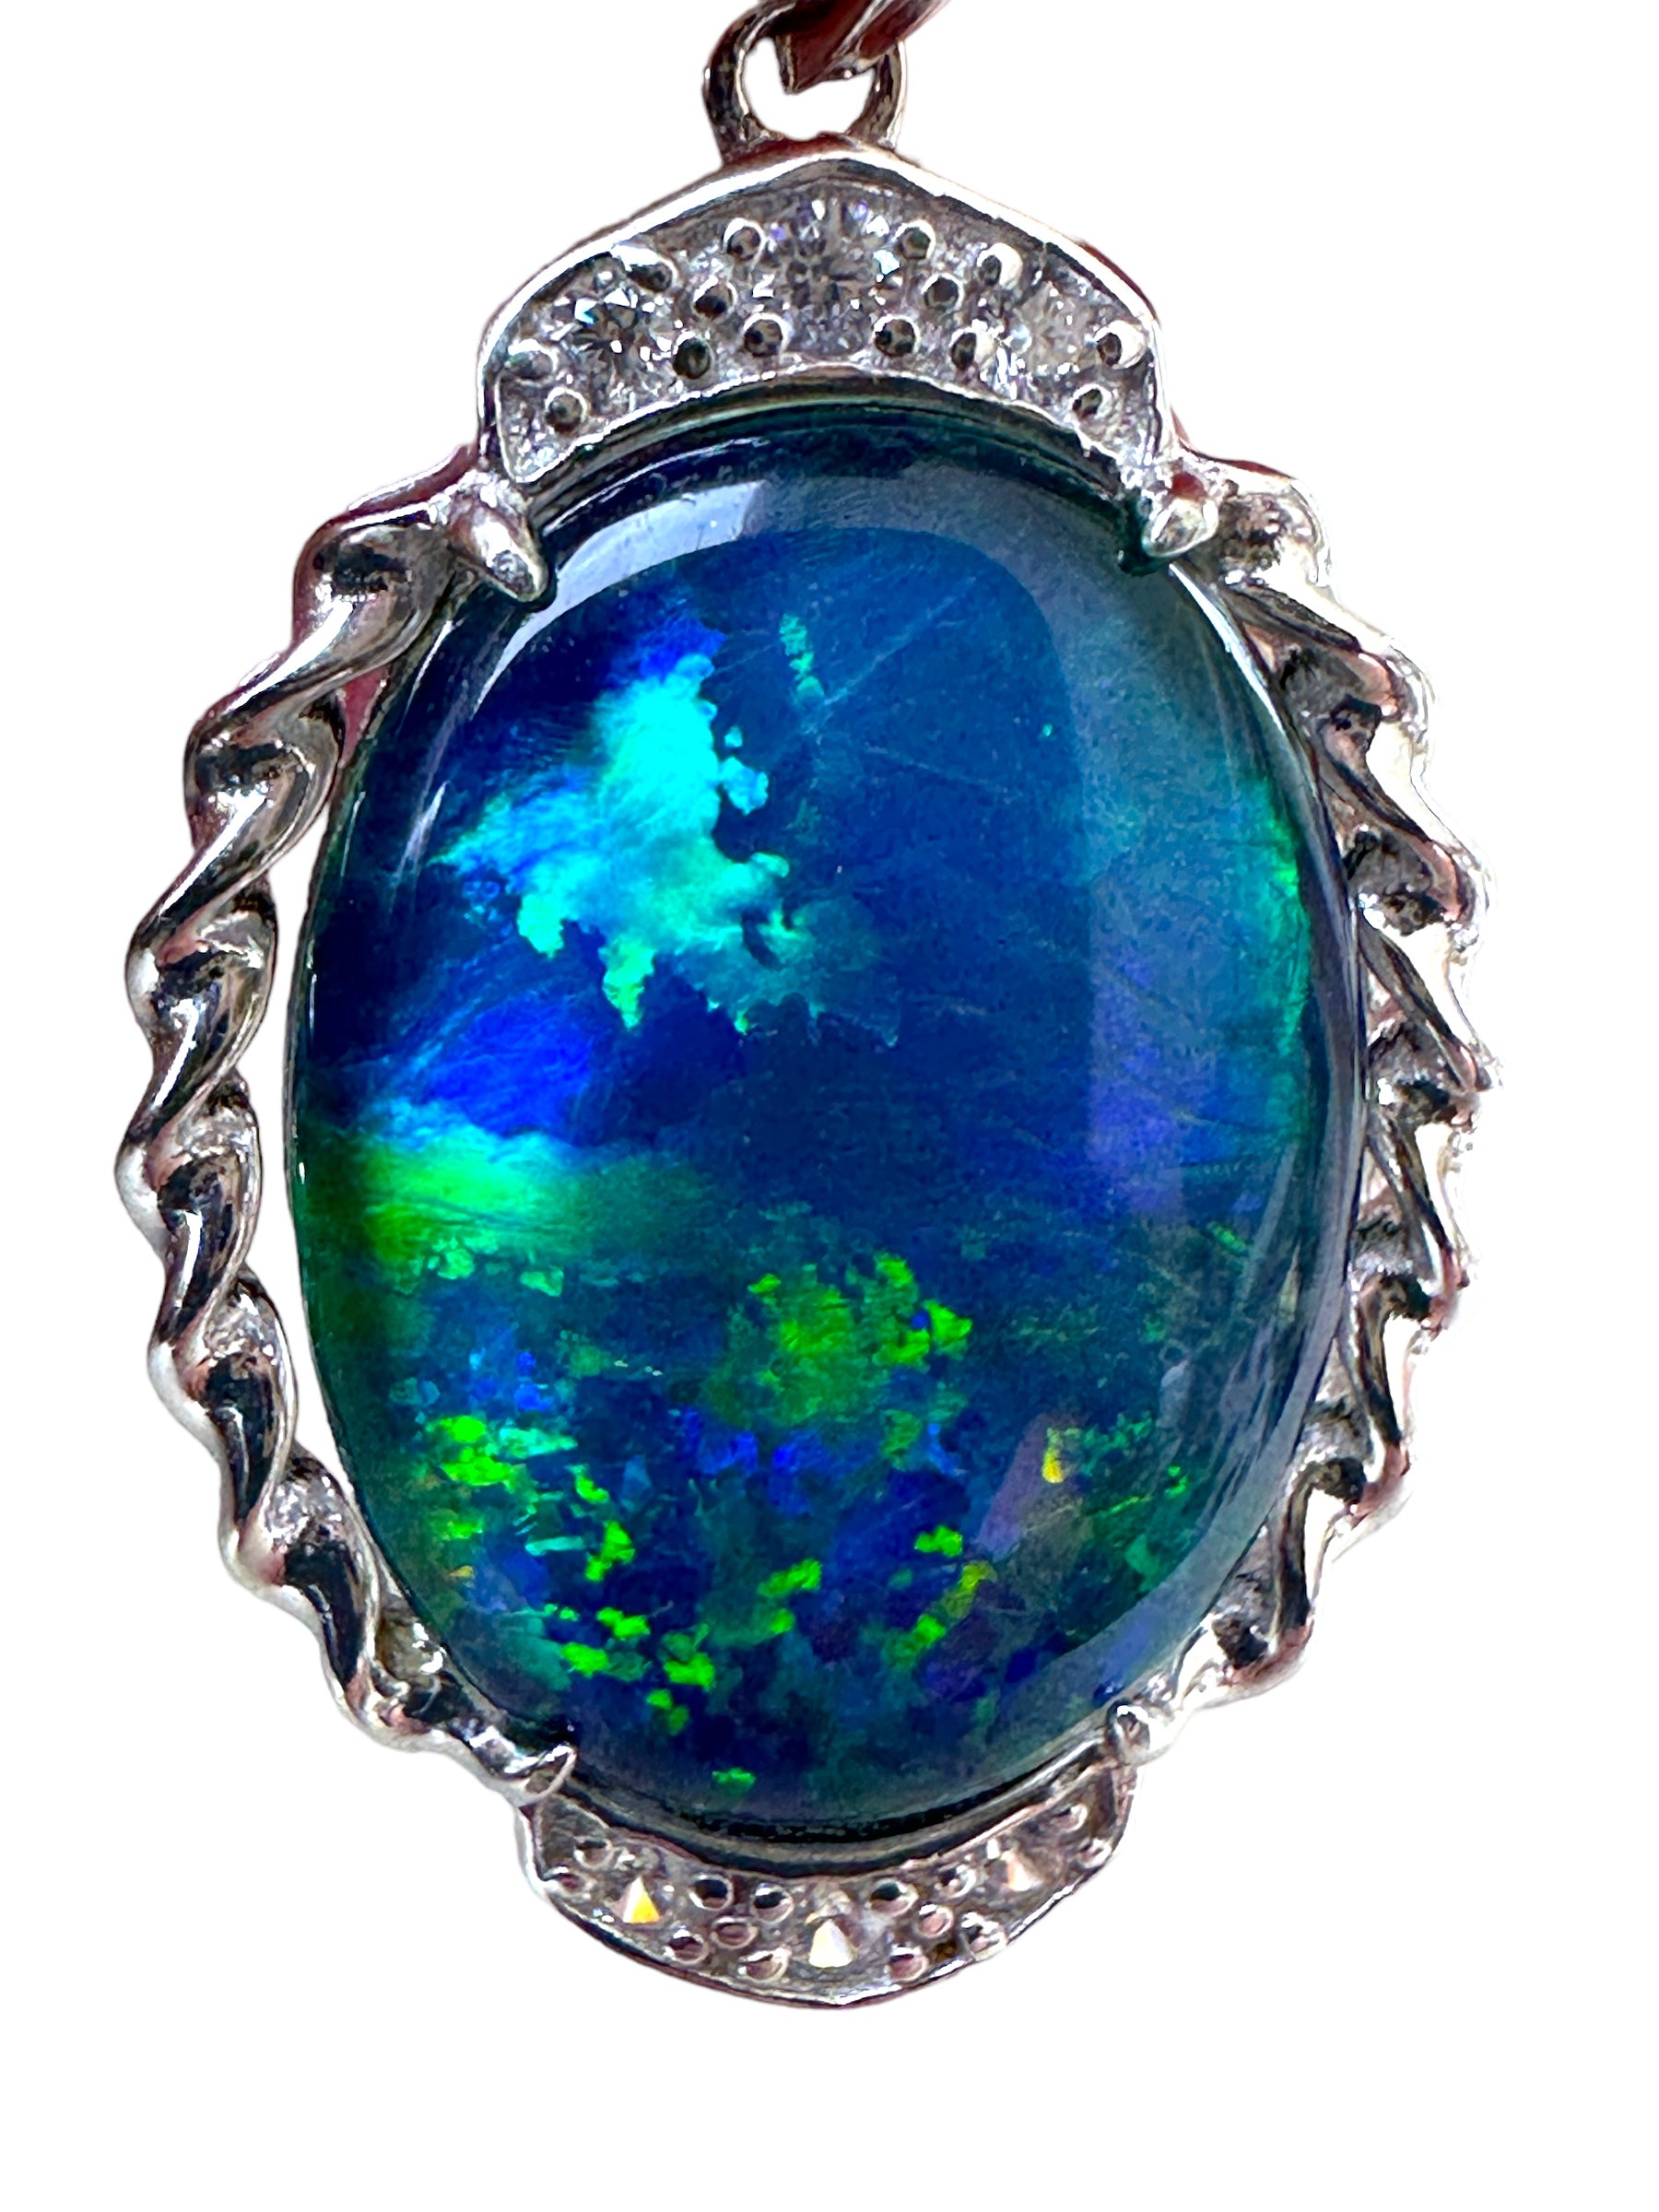 Brilliant flashing Australian Opal Pendant.